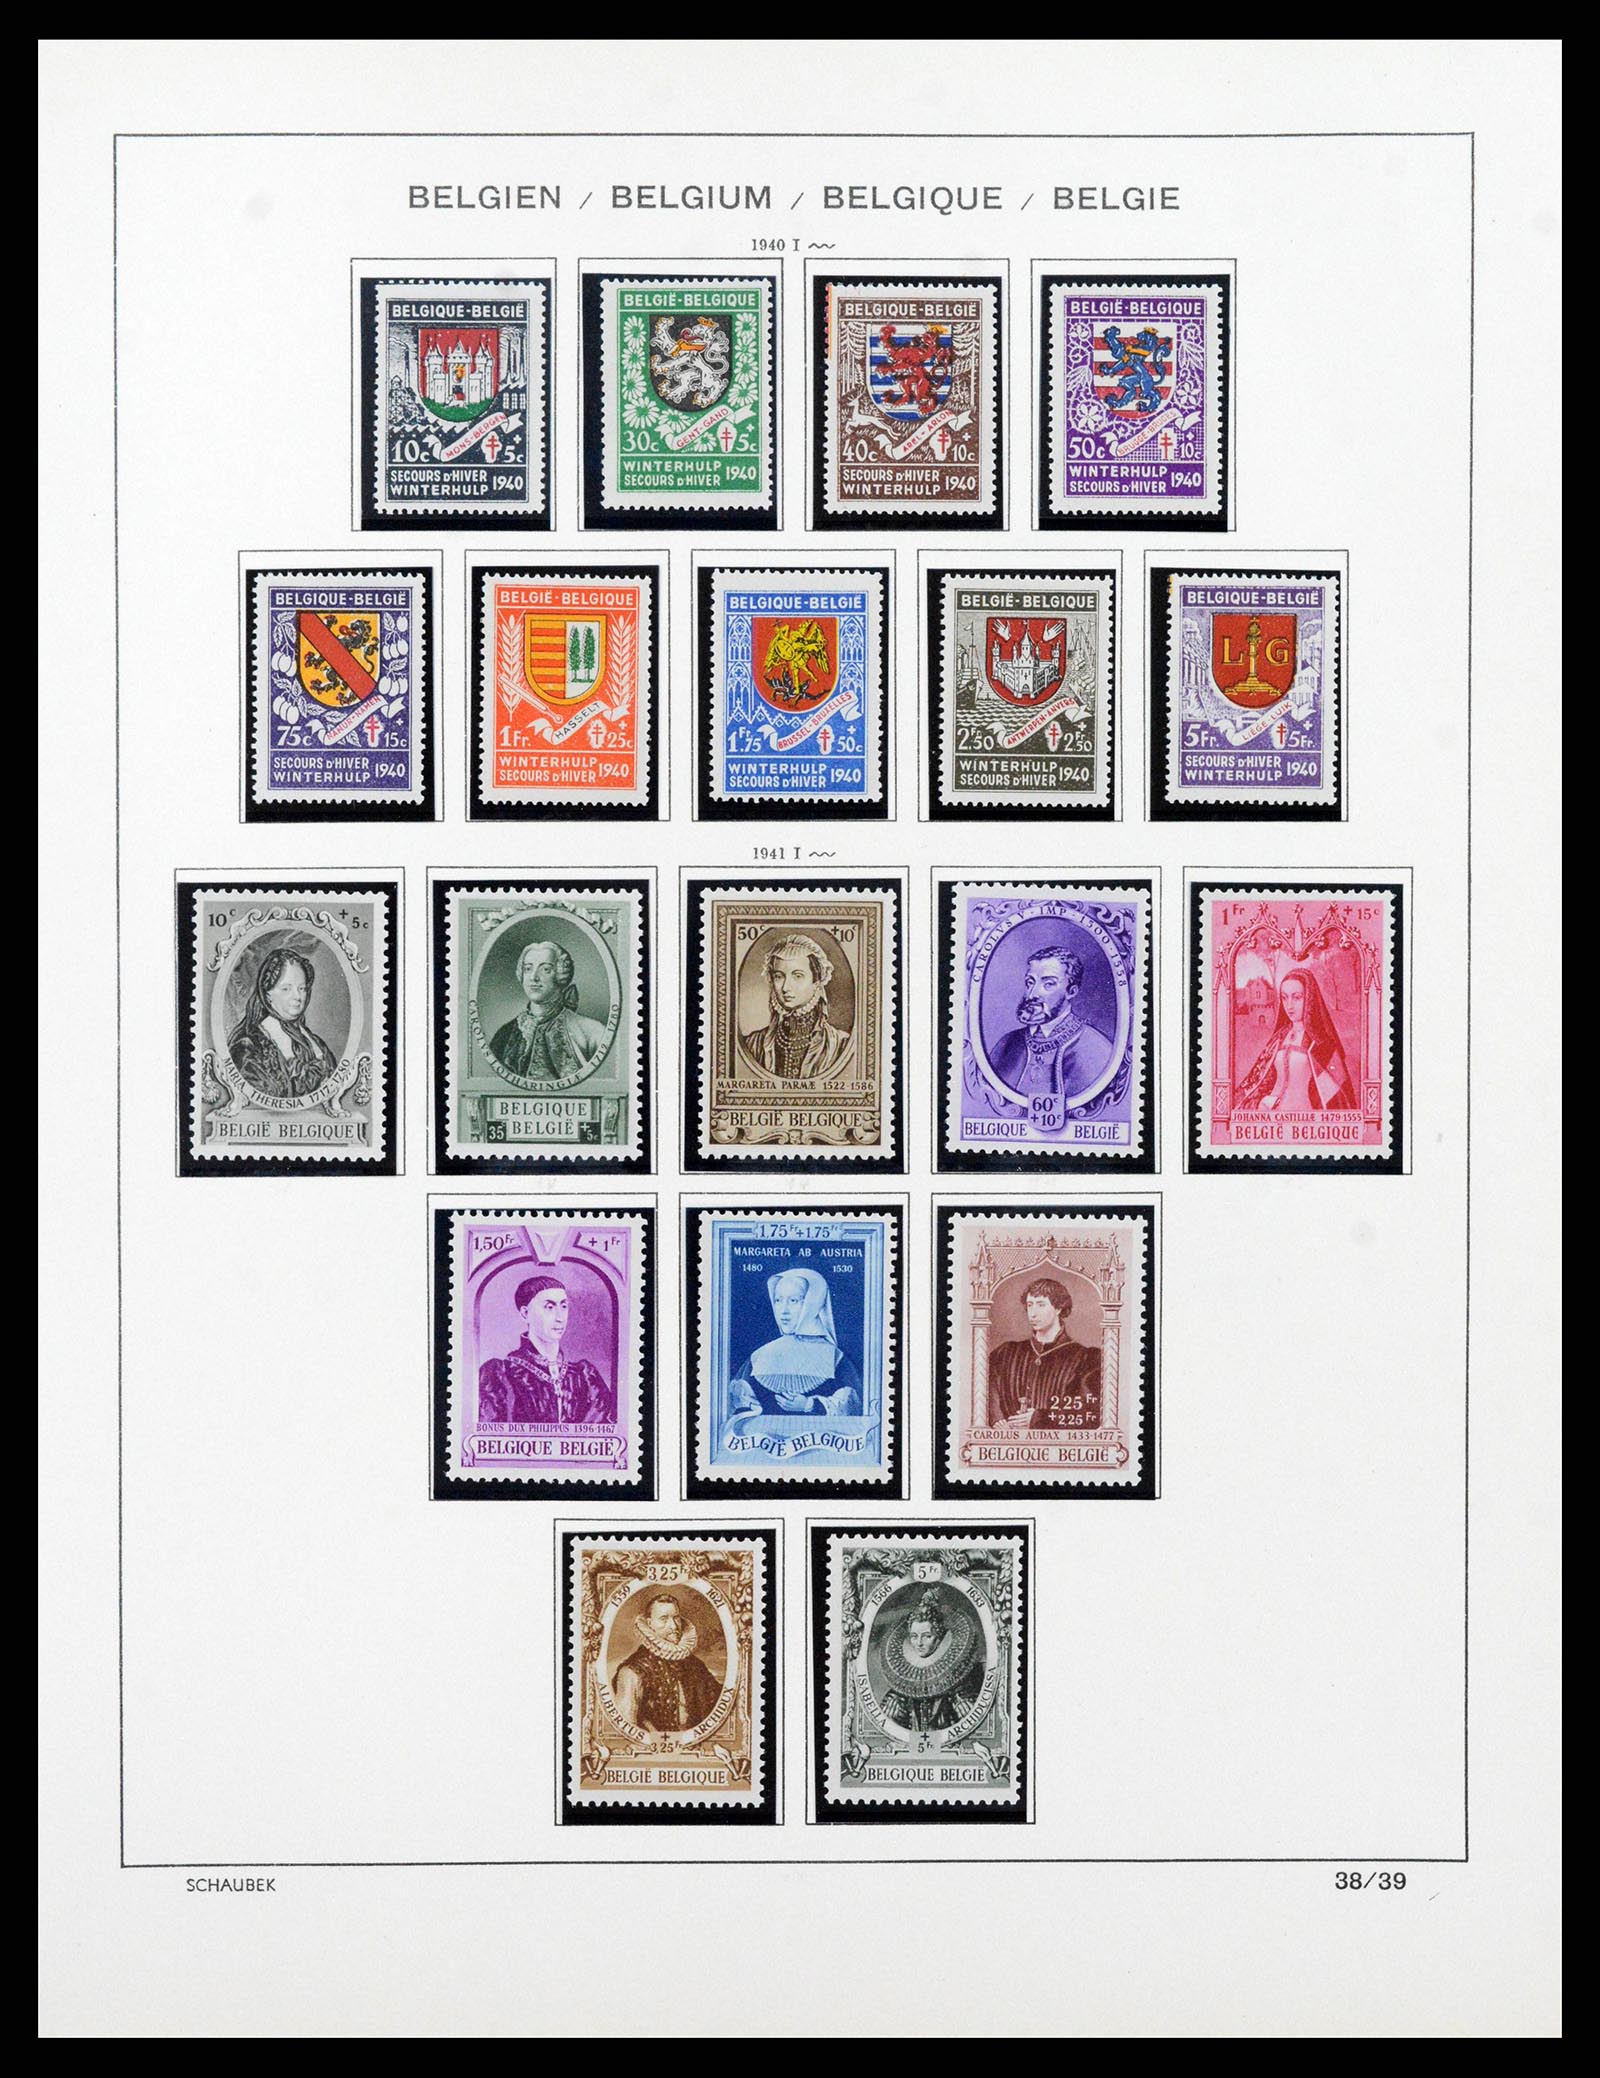 38489 0038 - Stamp collection 38489 Belgium 1849-1975.